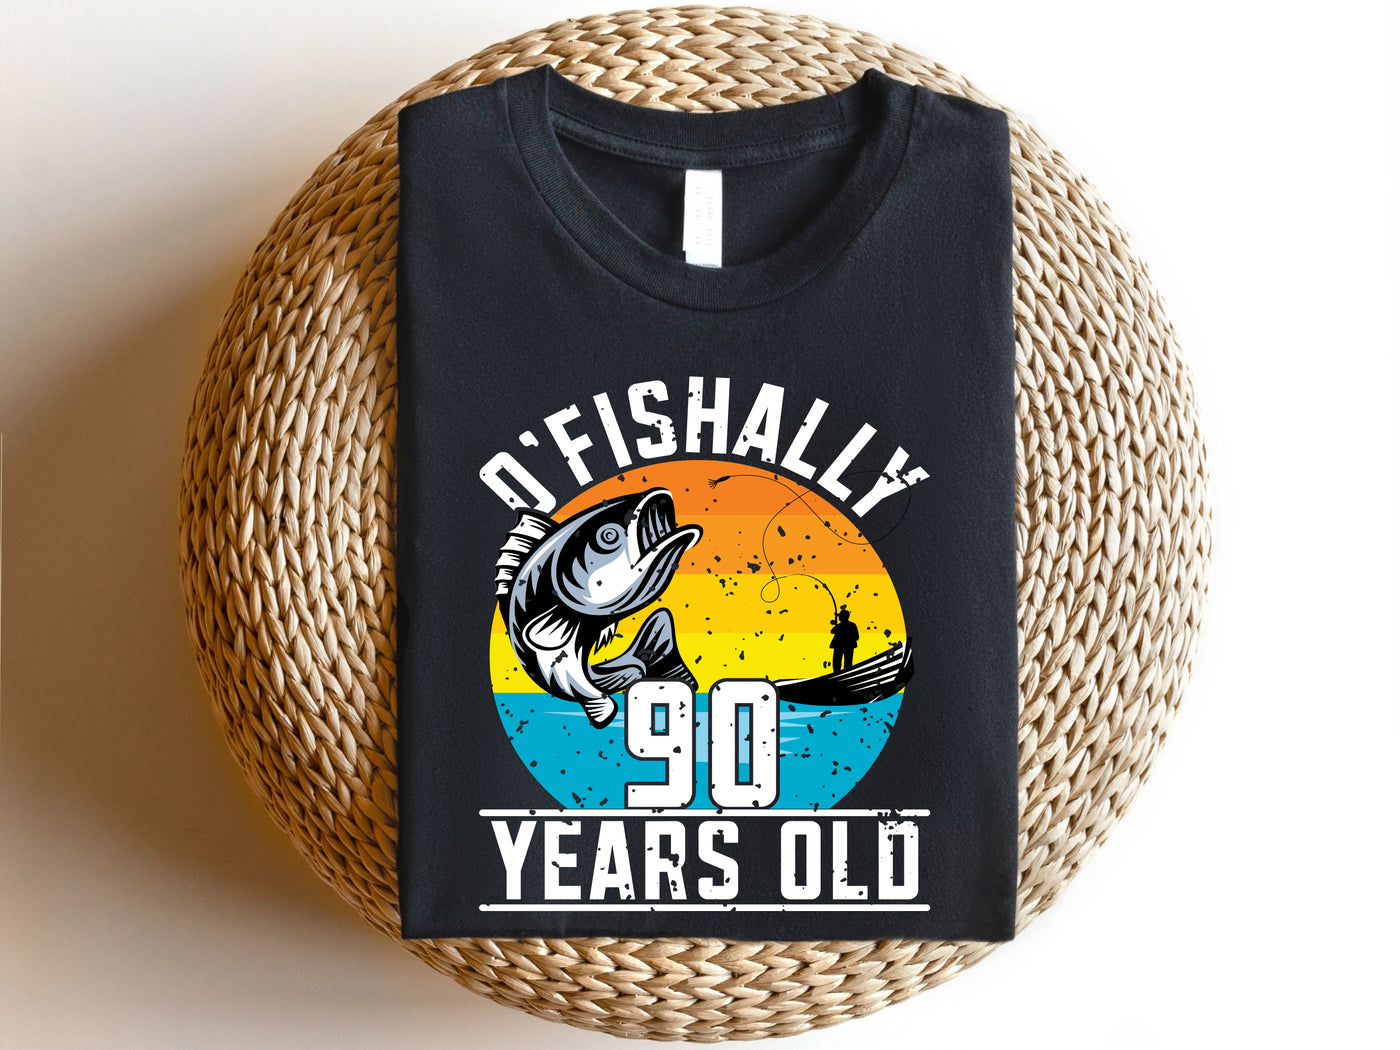 O’FISHALLY-90 Years Old